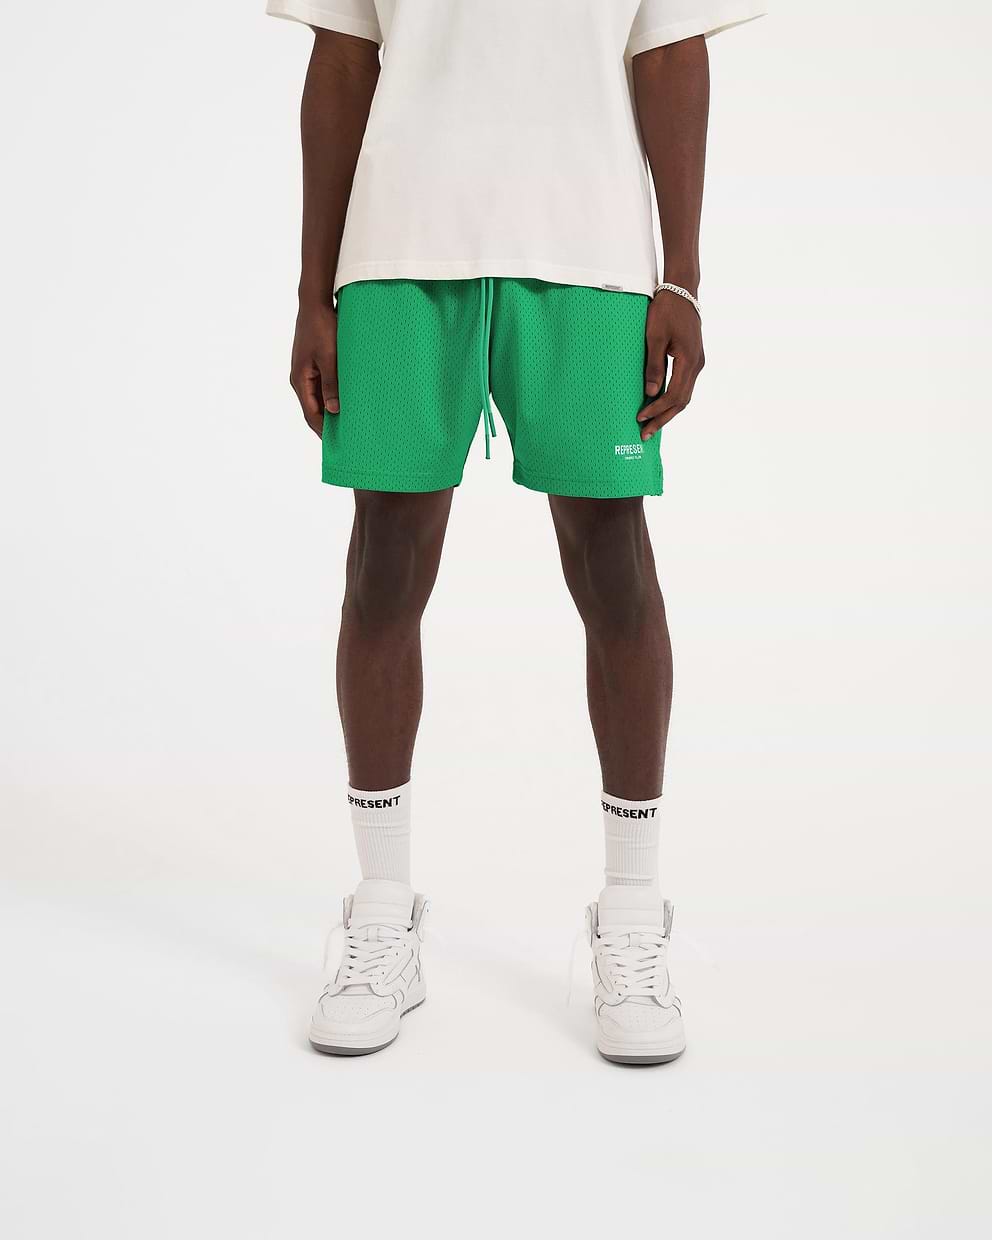 Represent Owners Club Mesh Shorts - Island Green